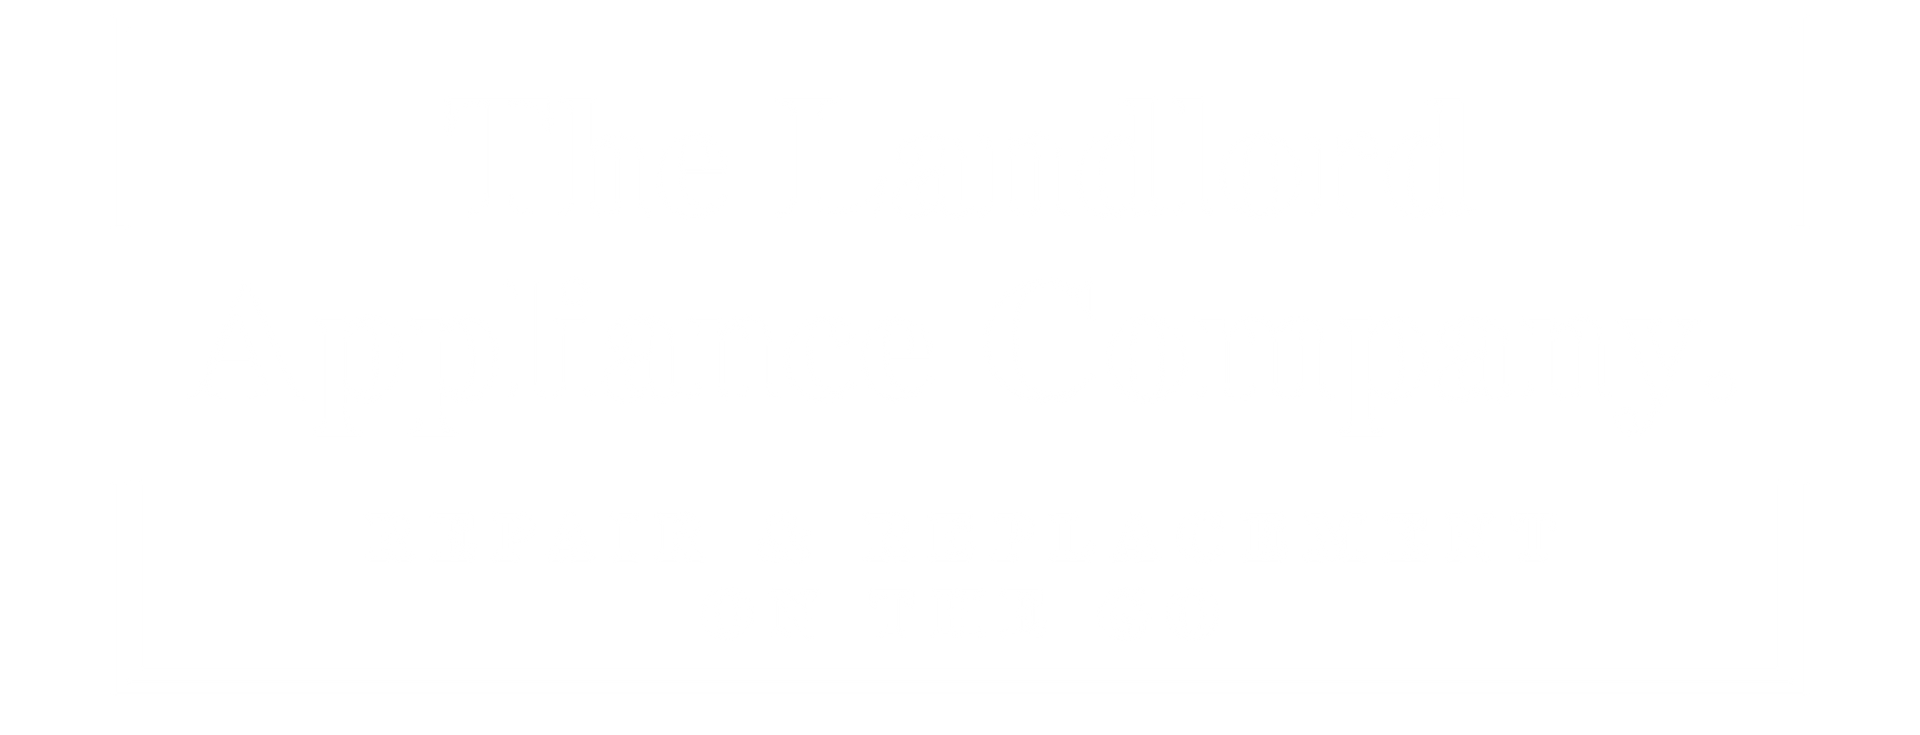 The Landlord Appliance Company logo